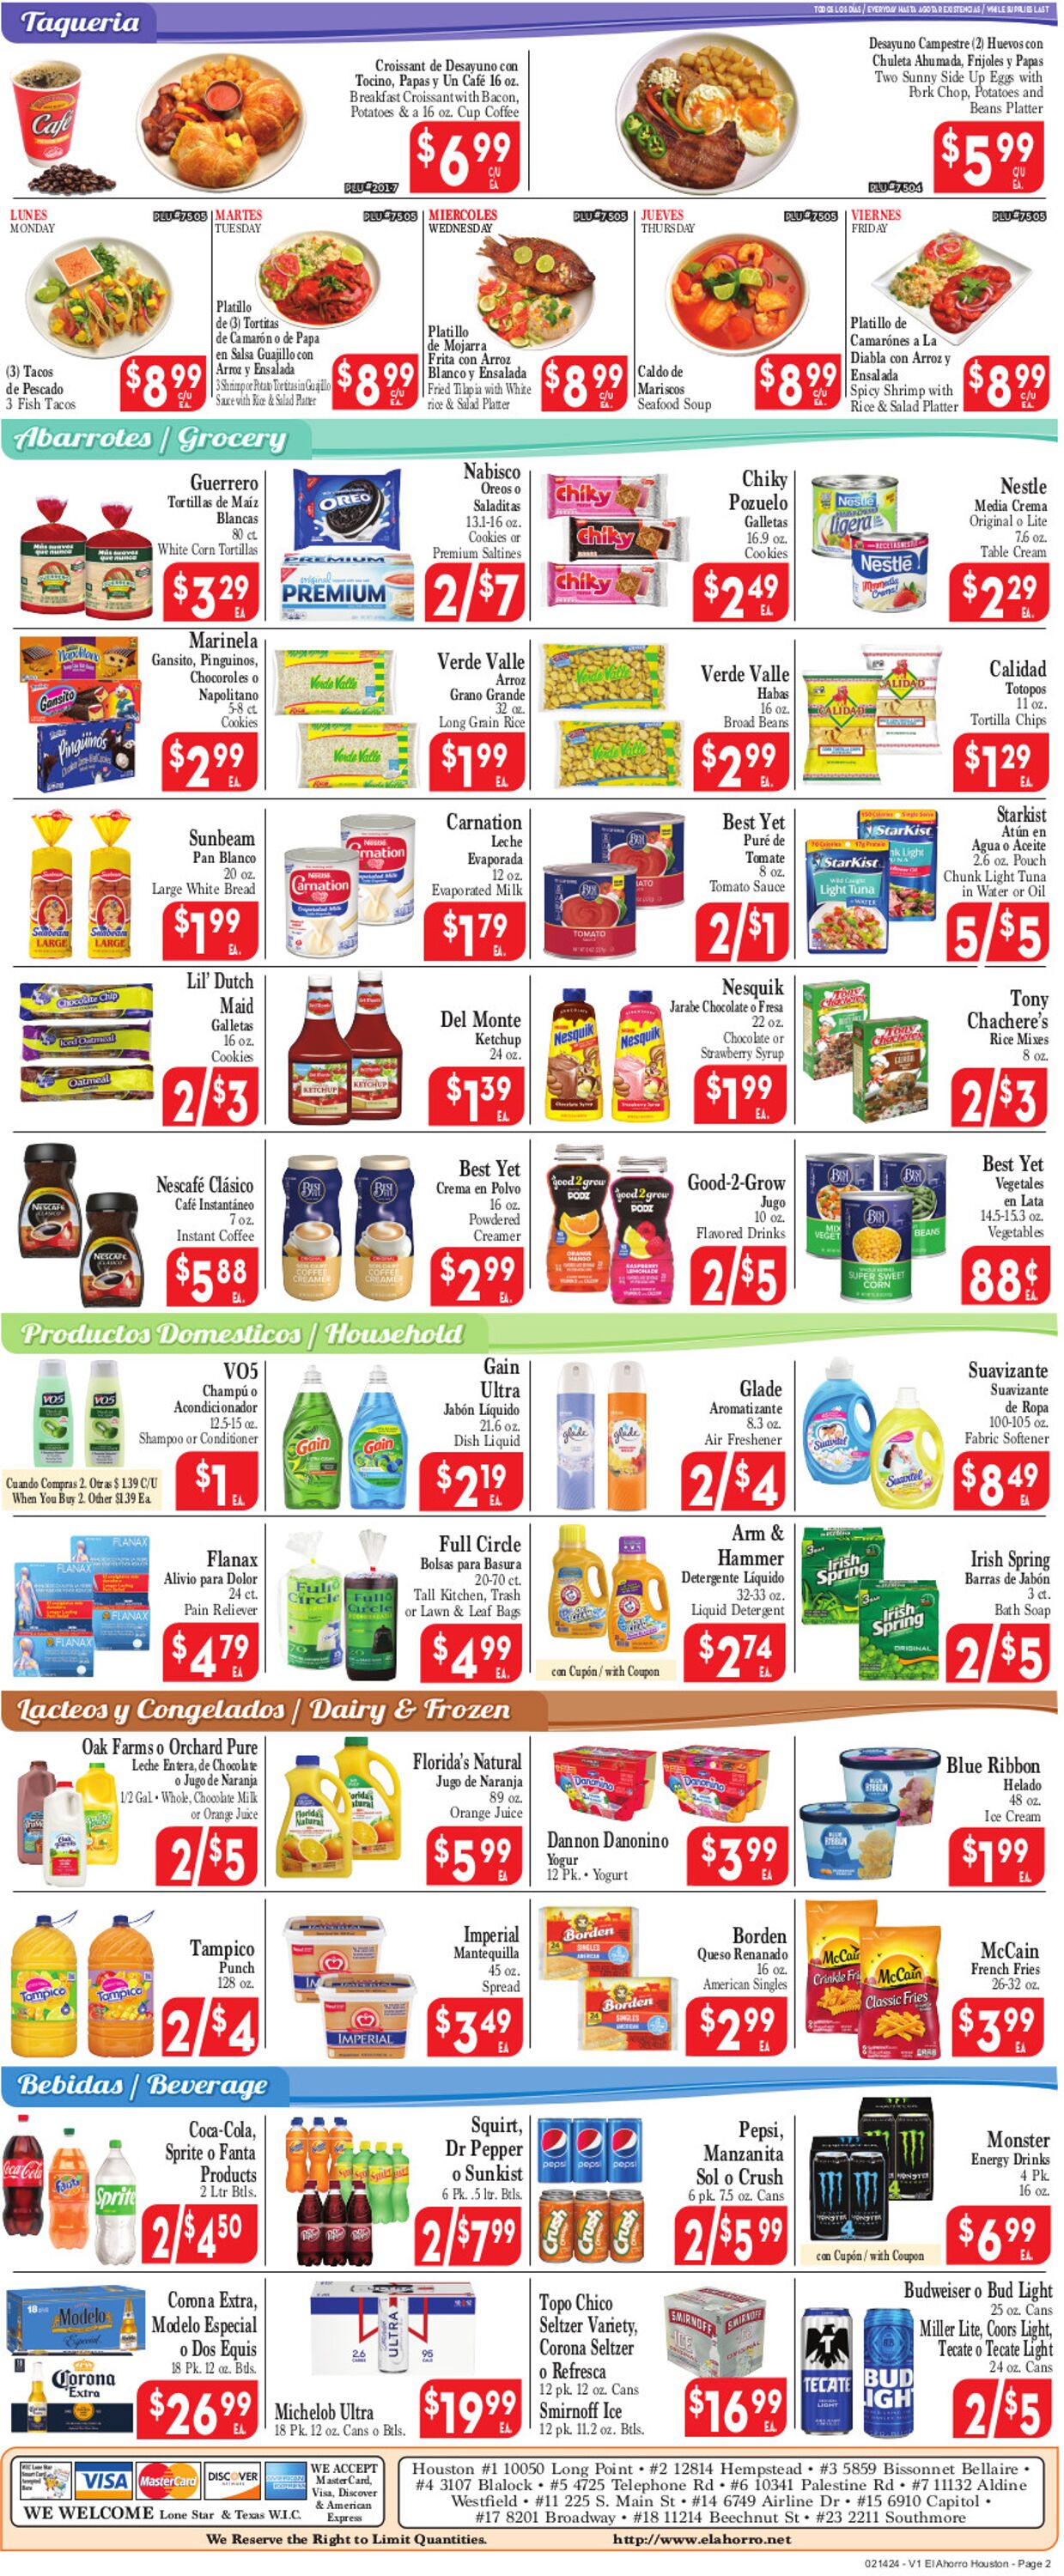 Catalogue El Ahorro Supermarket from 02/14/2024